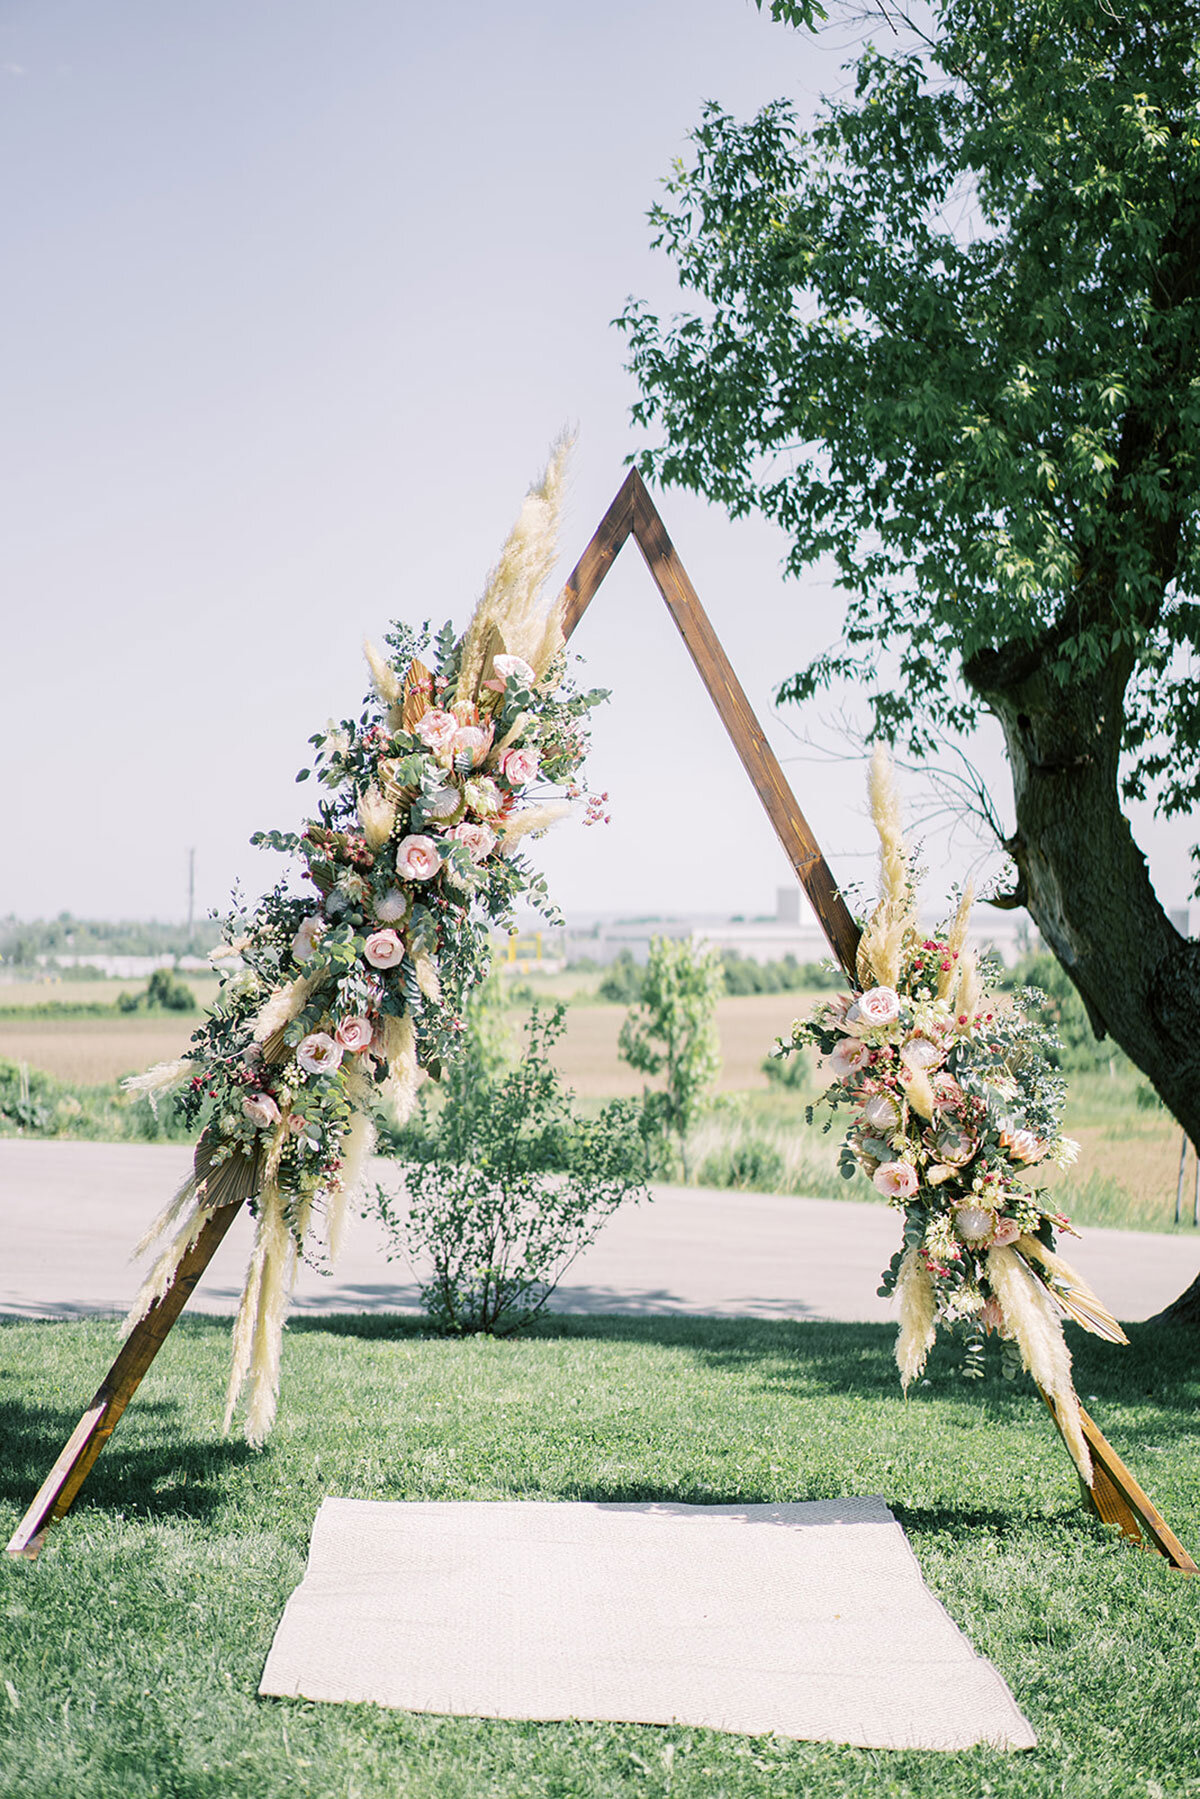 Sue-Gallo-Designs-Wedding-Florist-in-Southern-Ontario-Vineyard-Bride-The-Swish-List-0005.JPG